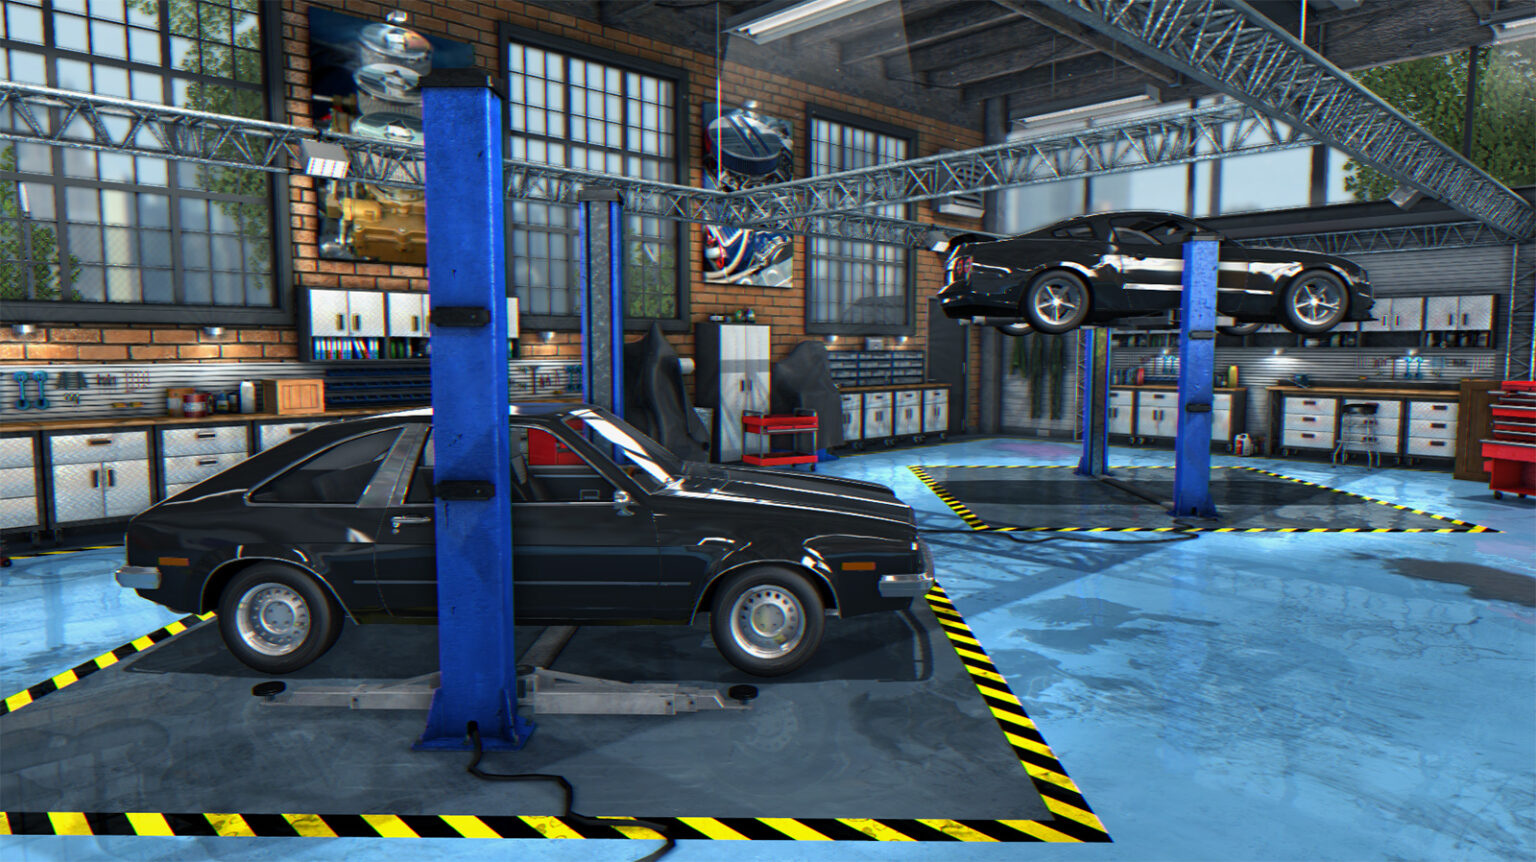 download car mechanic simulator 2015 free kickass